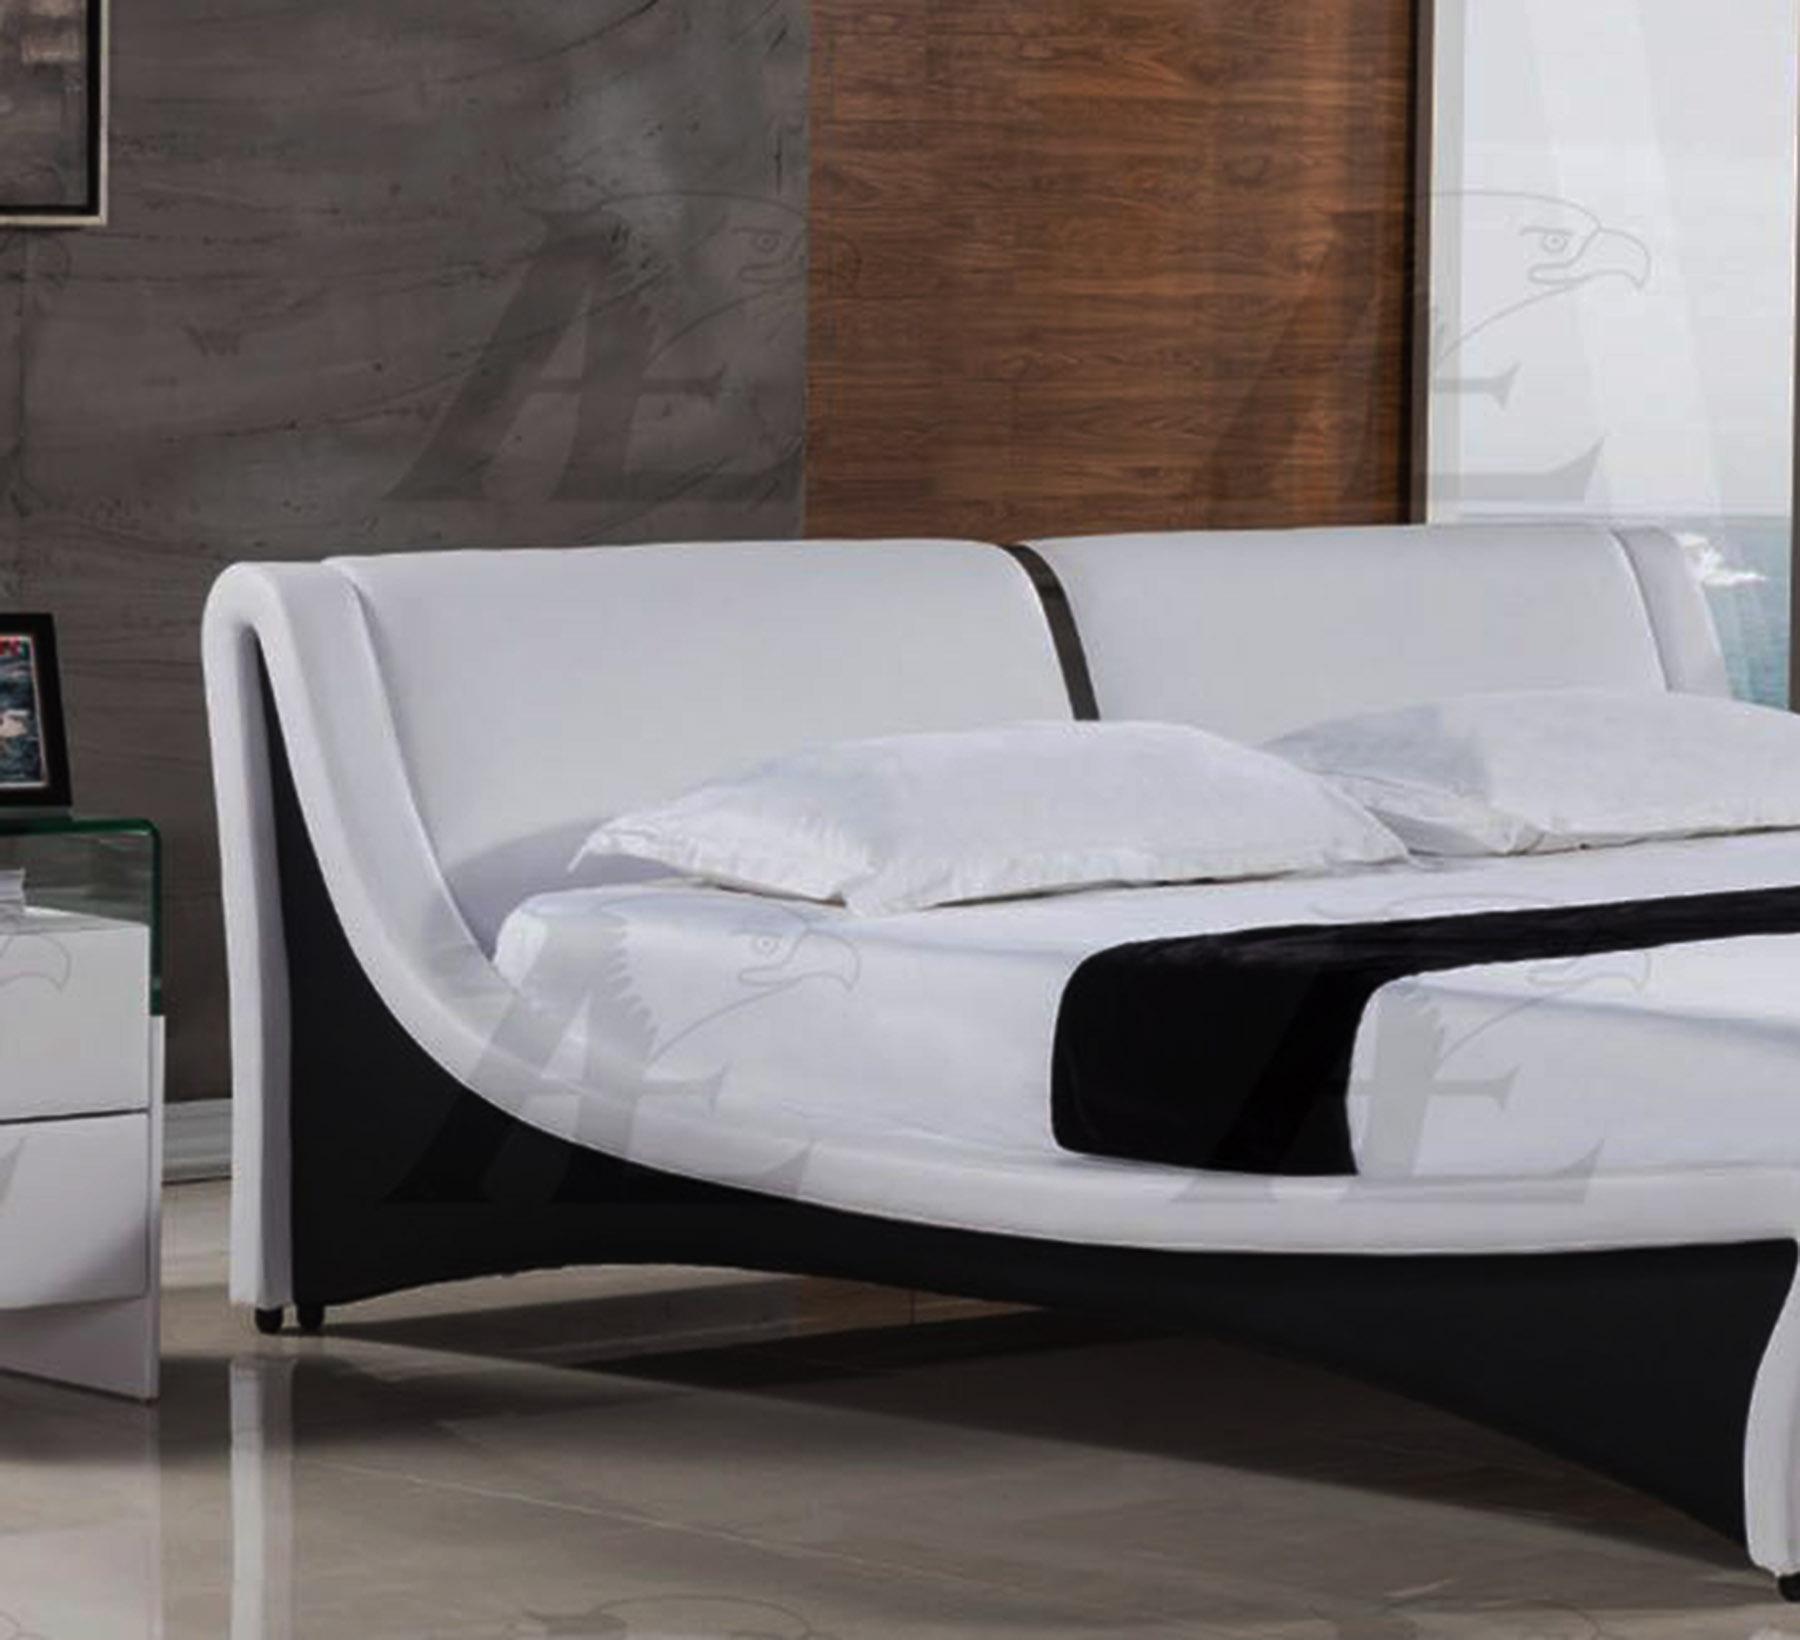 

    
American Eagle Furniture B-D039 Platform Bed White AE B-D039-Q
